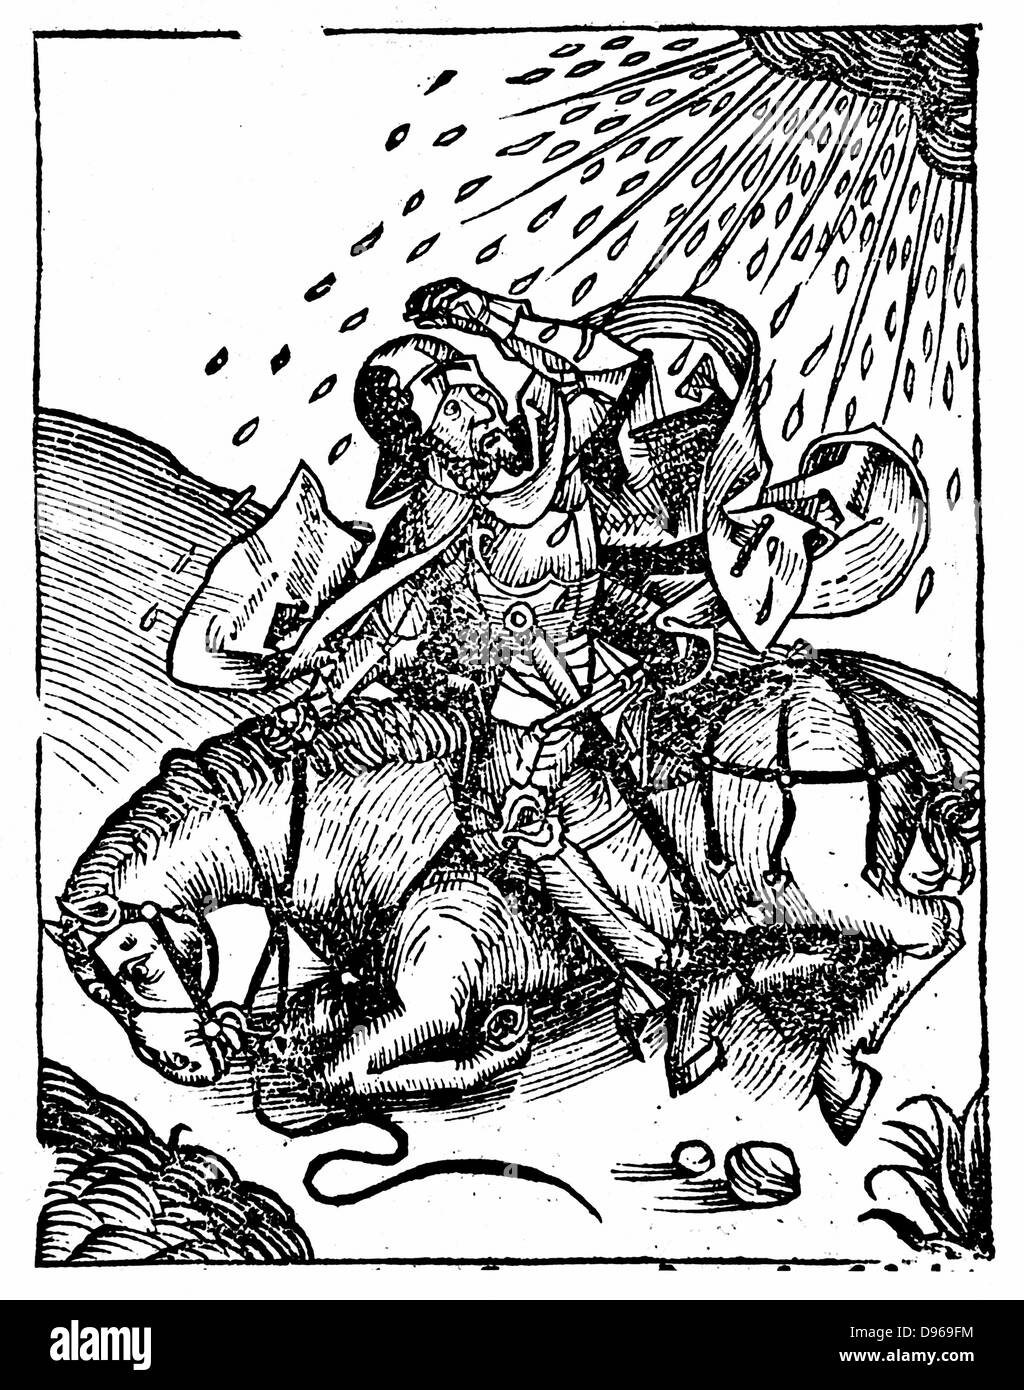 Bekehrung des hl. Paulus auf dem Weg nach Damaskus. Von Hartmann Schedel "Liber chronicarum Mundi' Nürnberg Chronik", Nürnberg 1493. Holzschnitt. Stockfoto